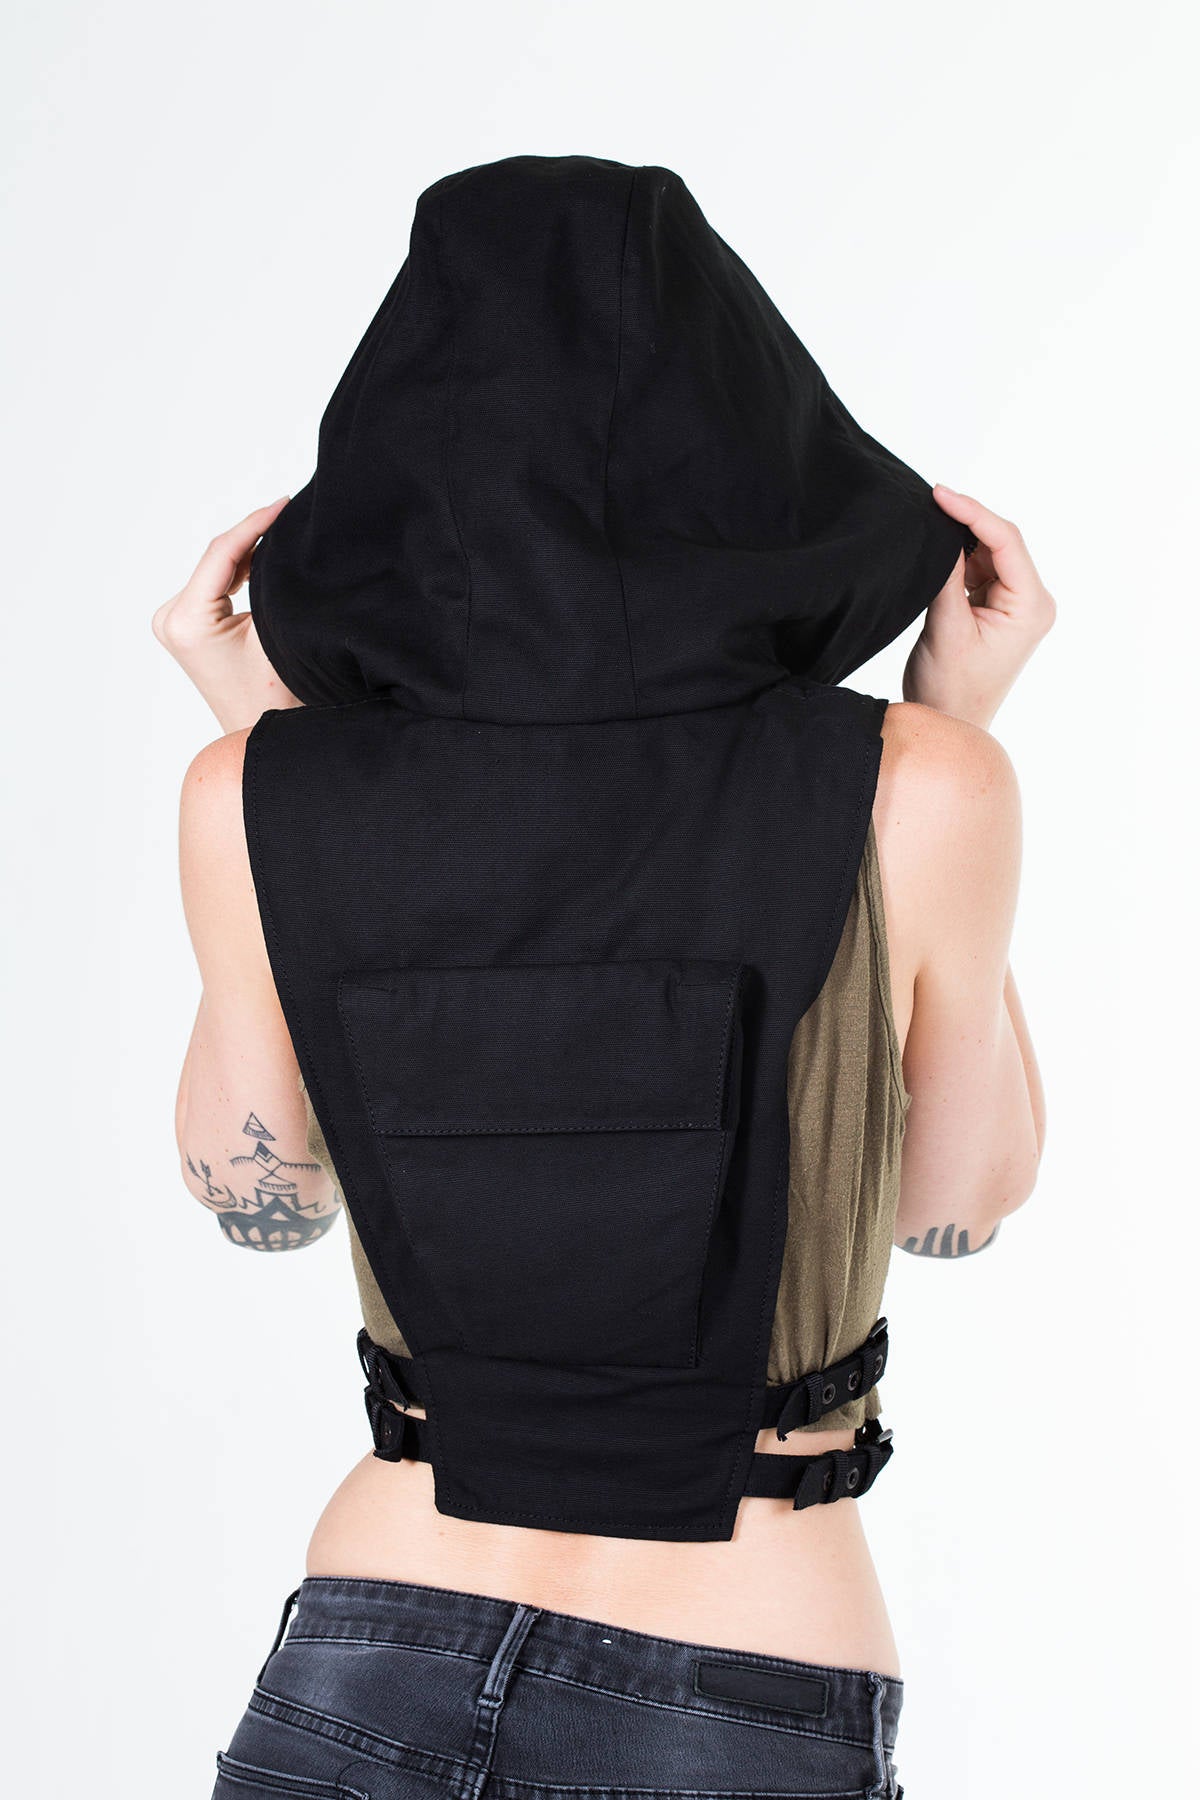 Ninja Kombat Hood Techwear Crop Top Vest  in Jet Black Canvas